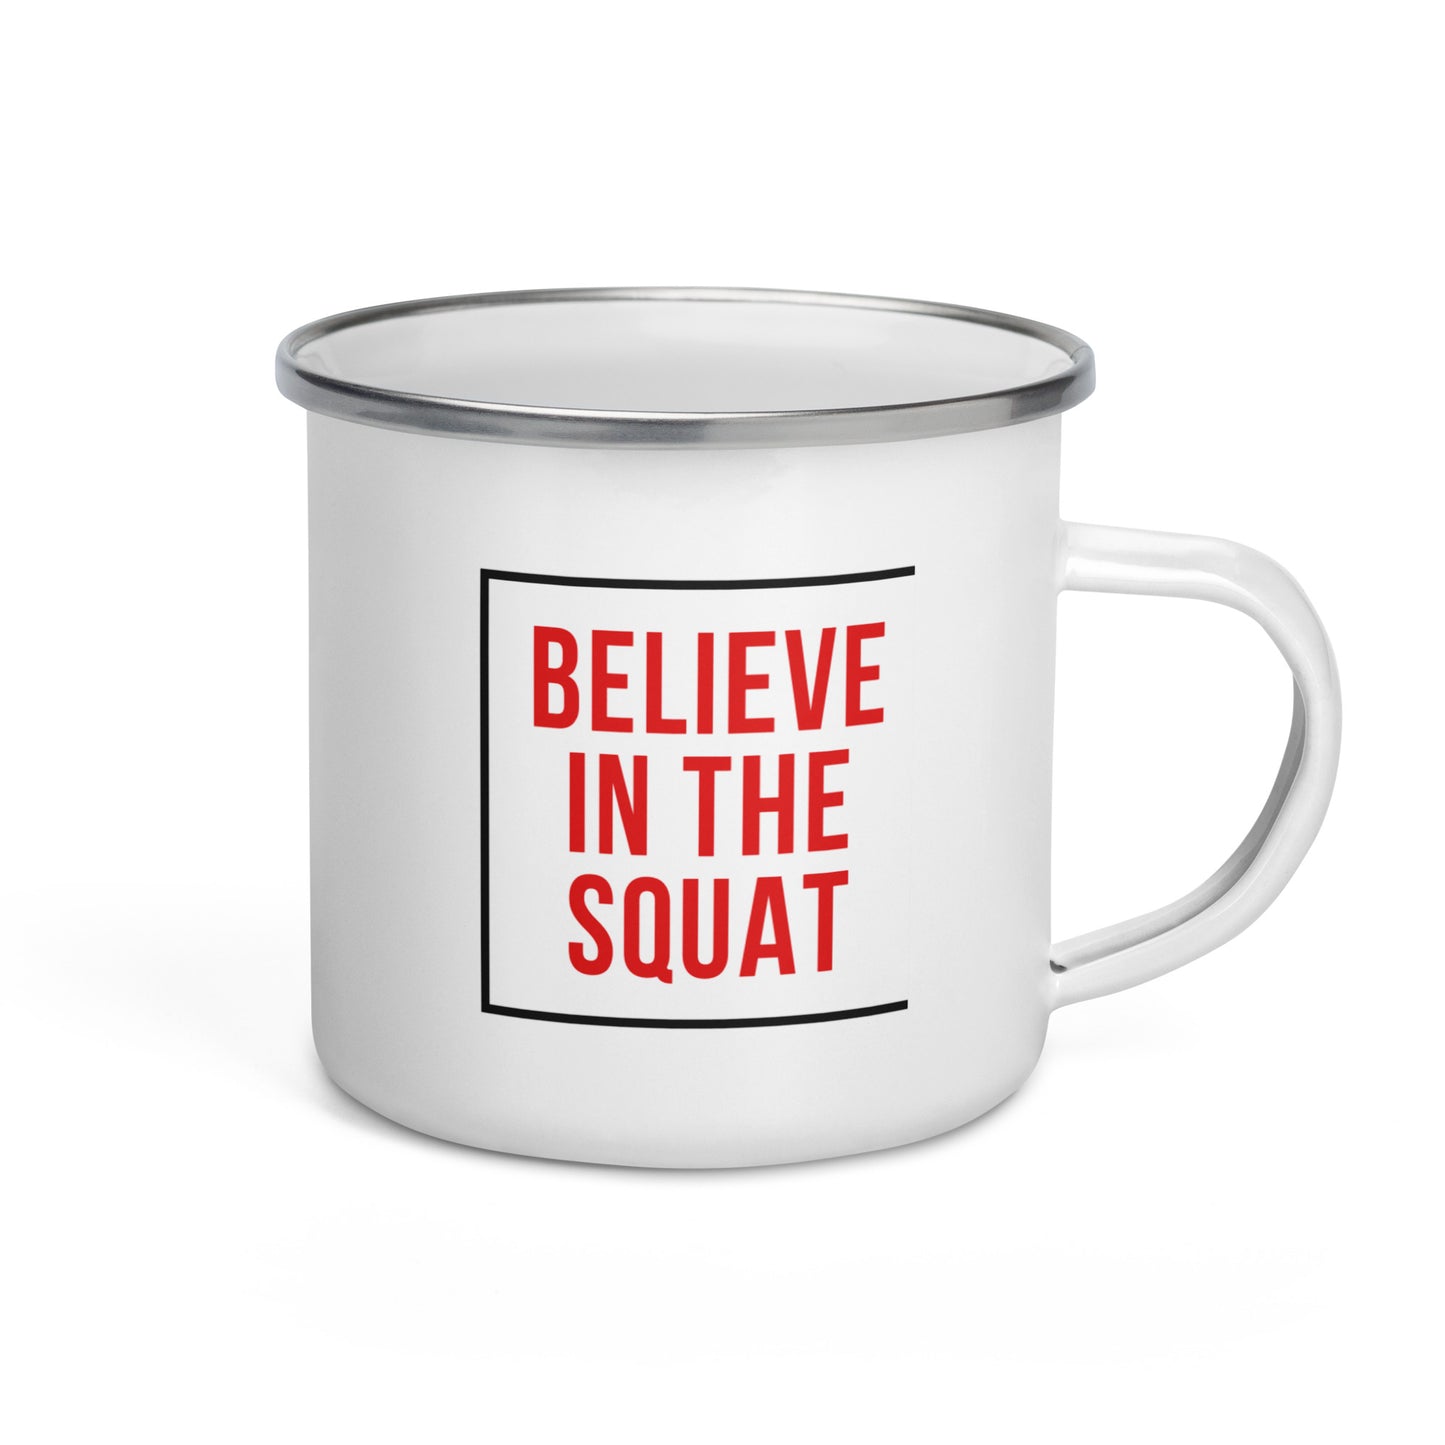 Believe in the Squat: Enamel Mug